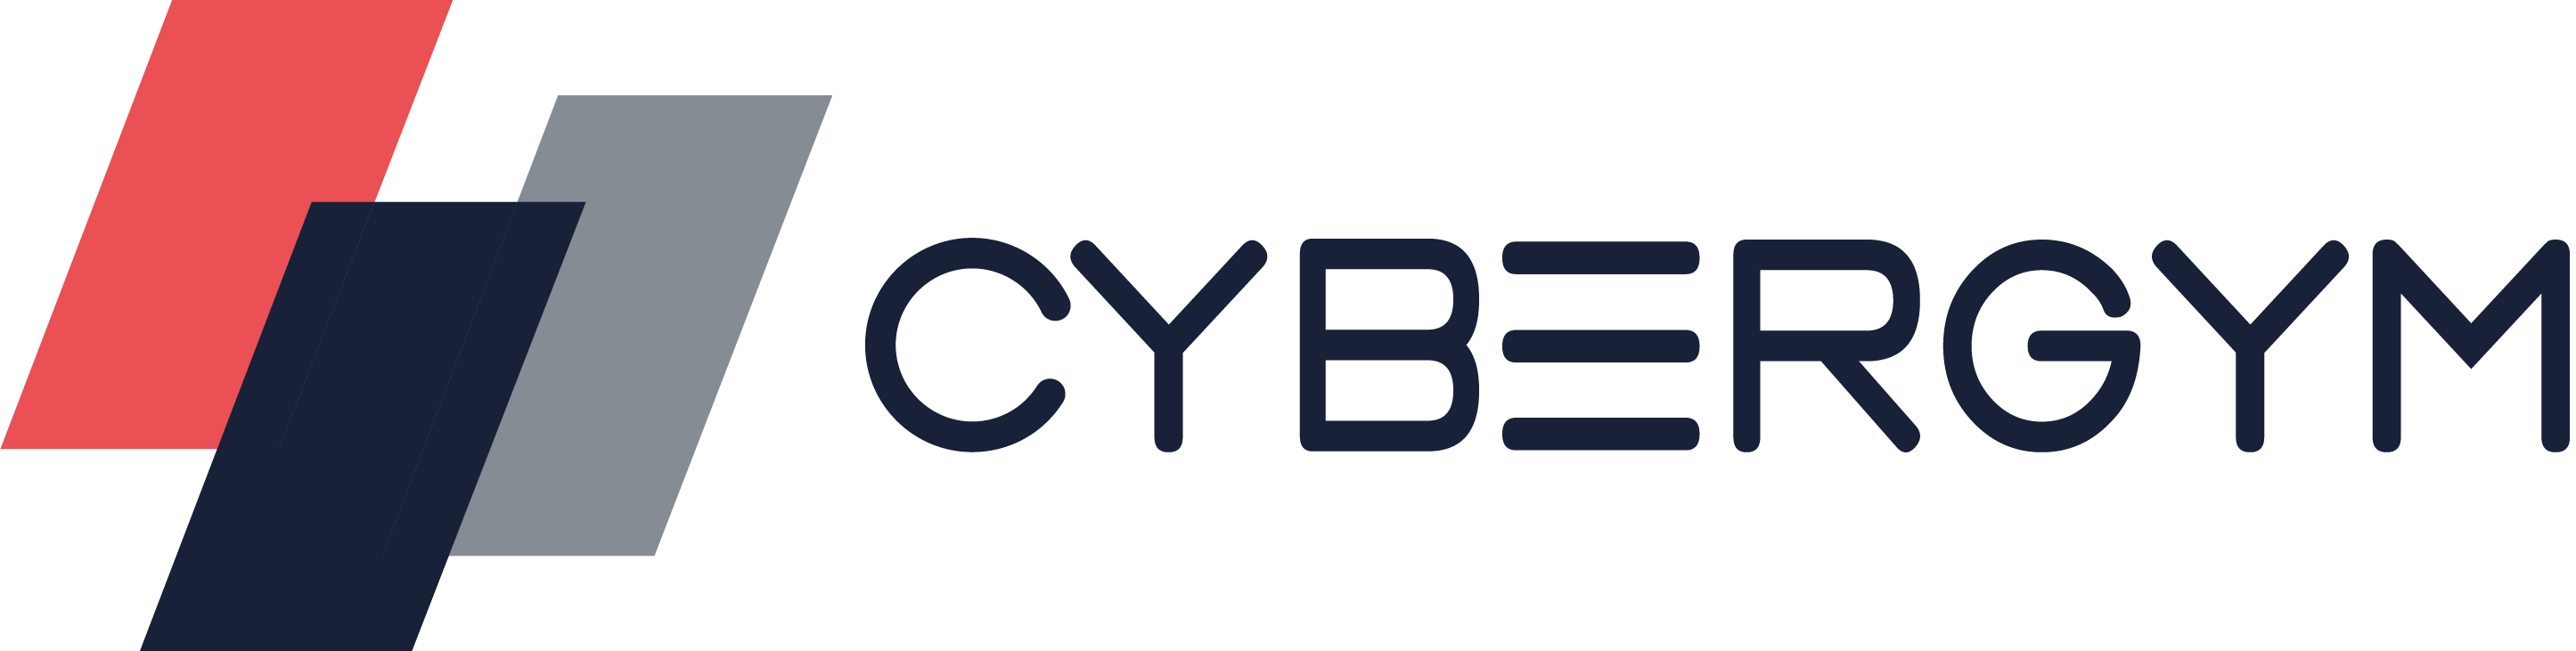 CyberGym logo